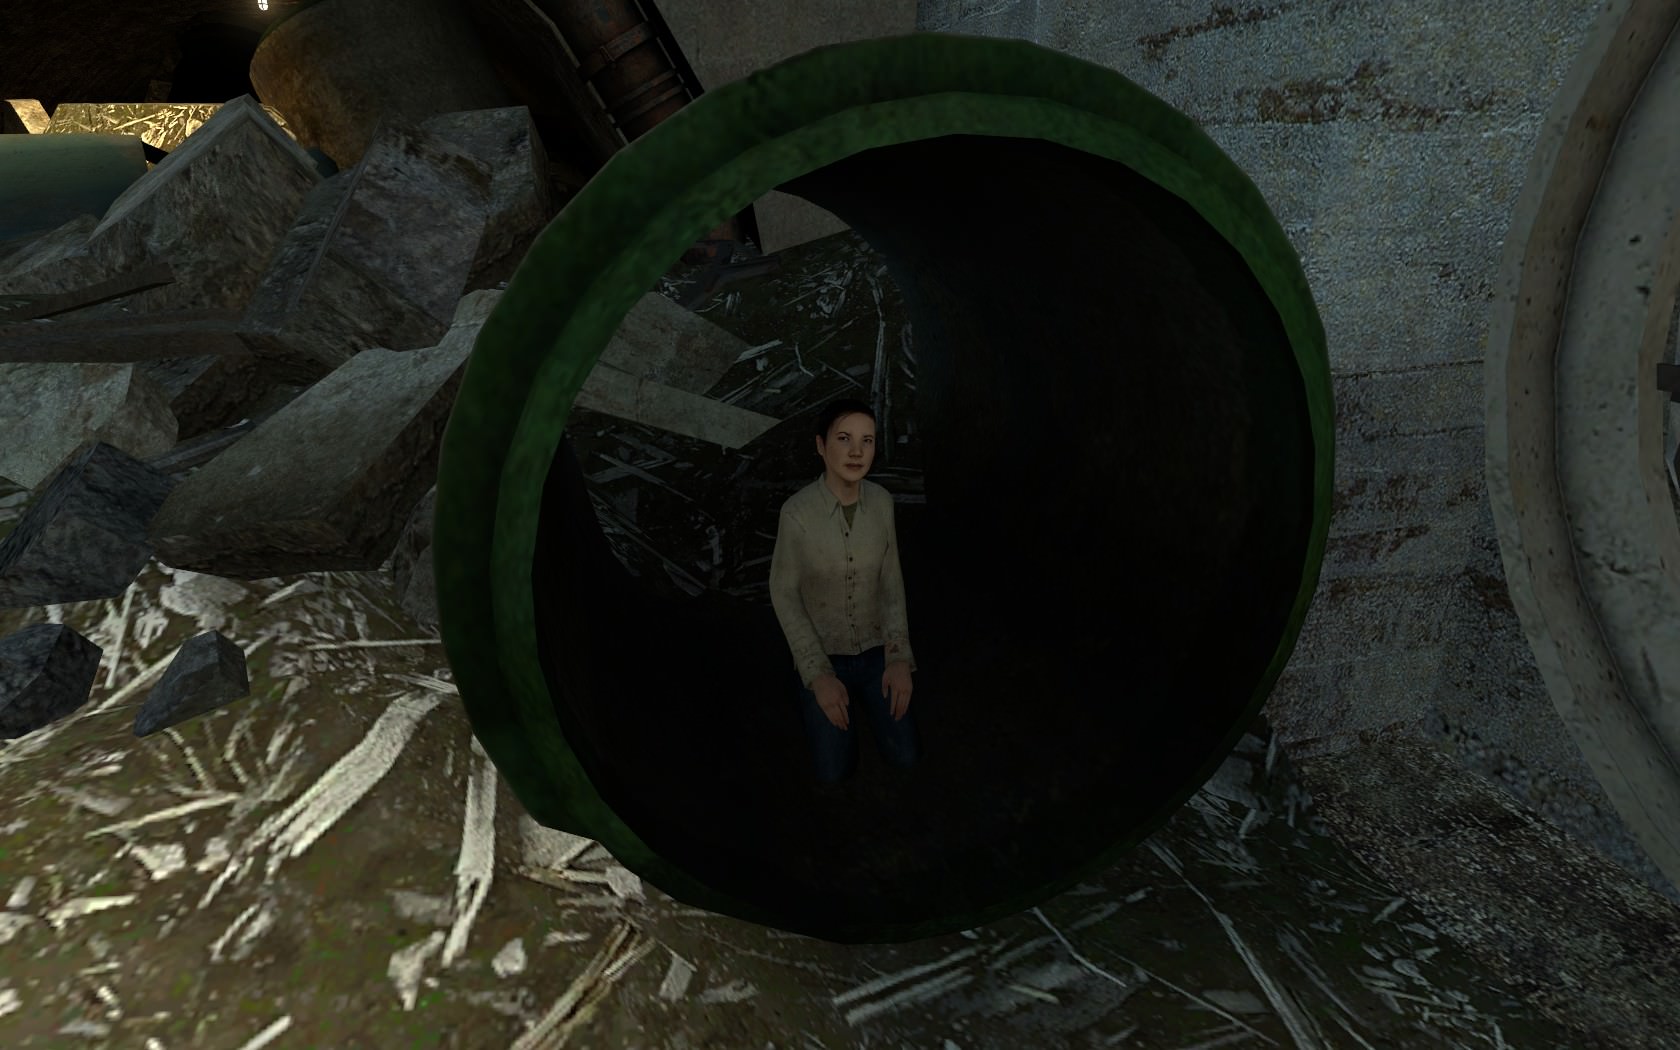 проникнуть в институт fallout 4 через канализацию как фото 53